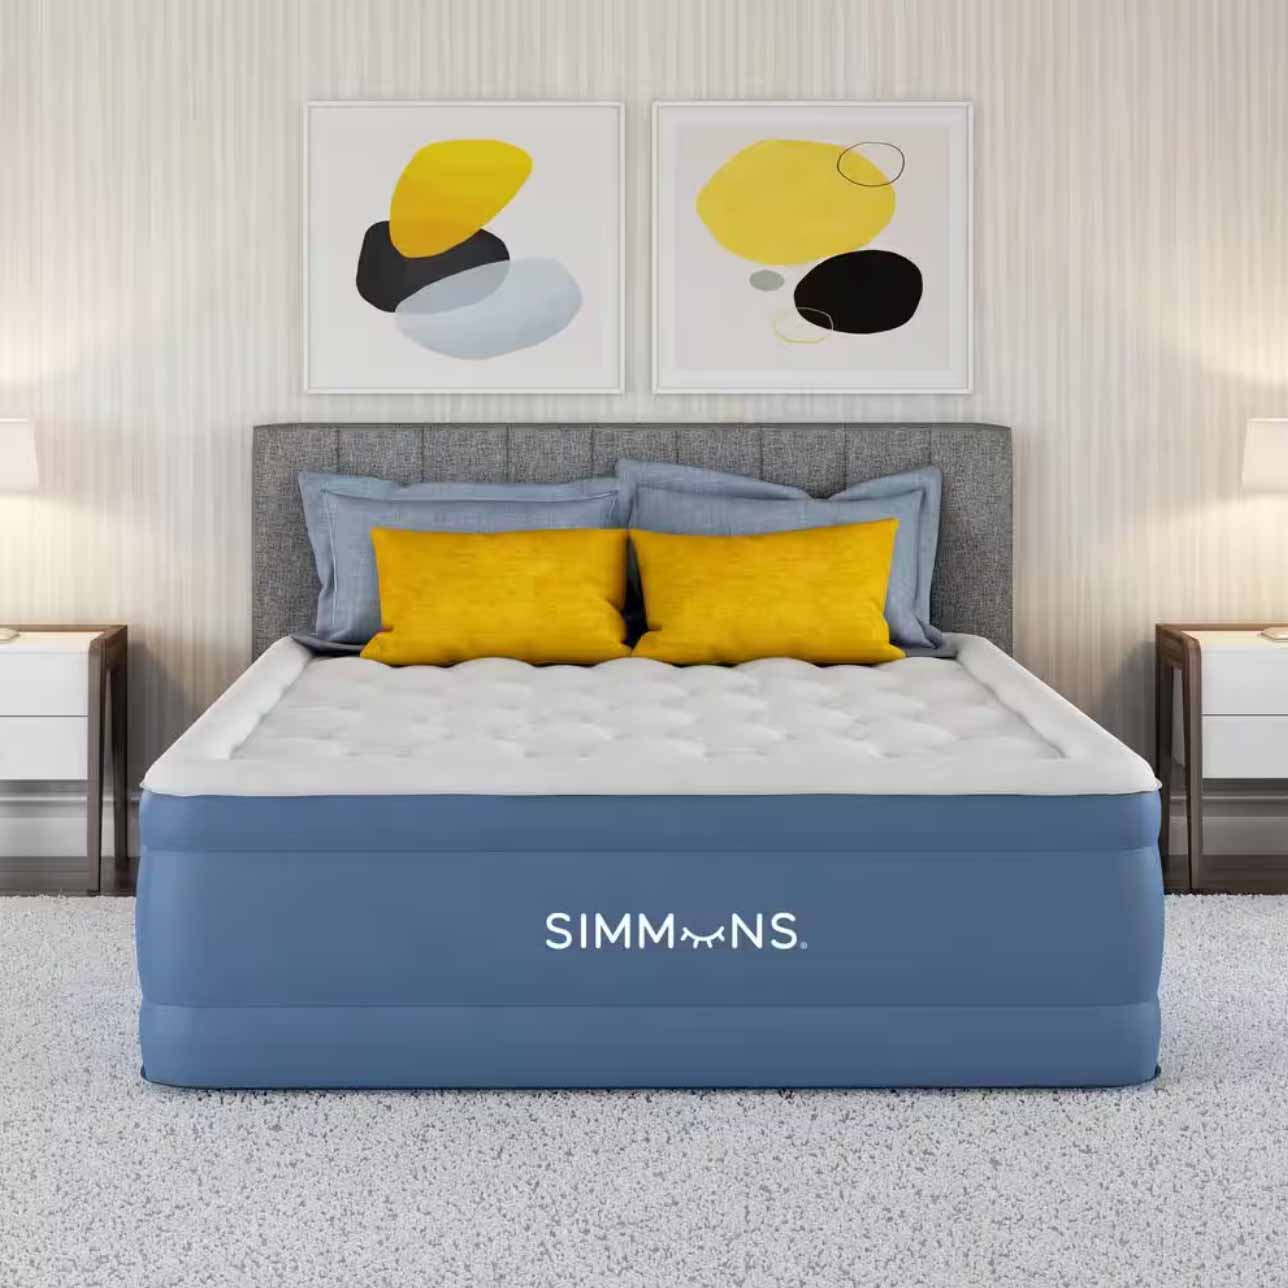 Air mattress in bedroom setting